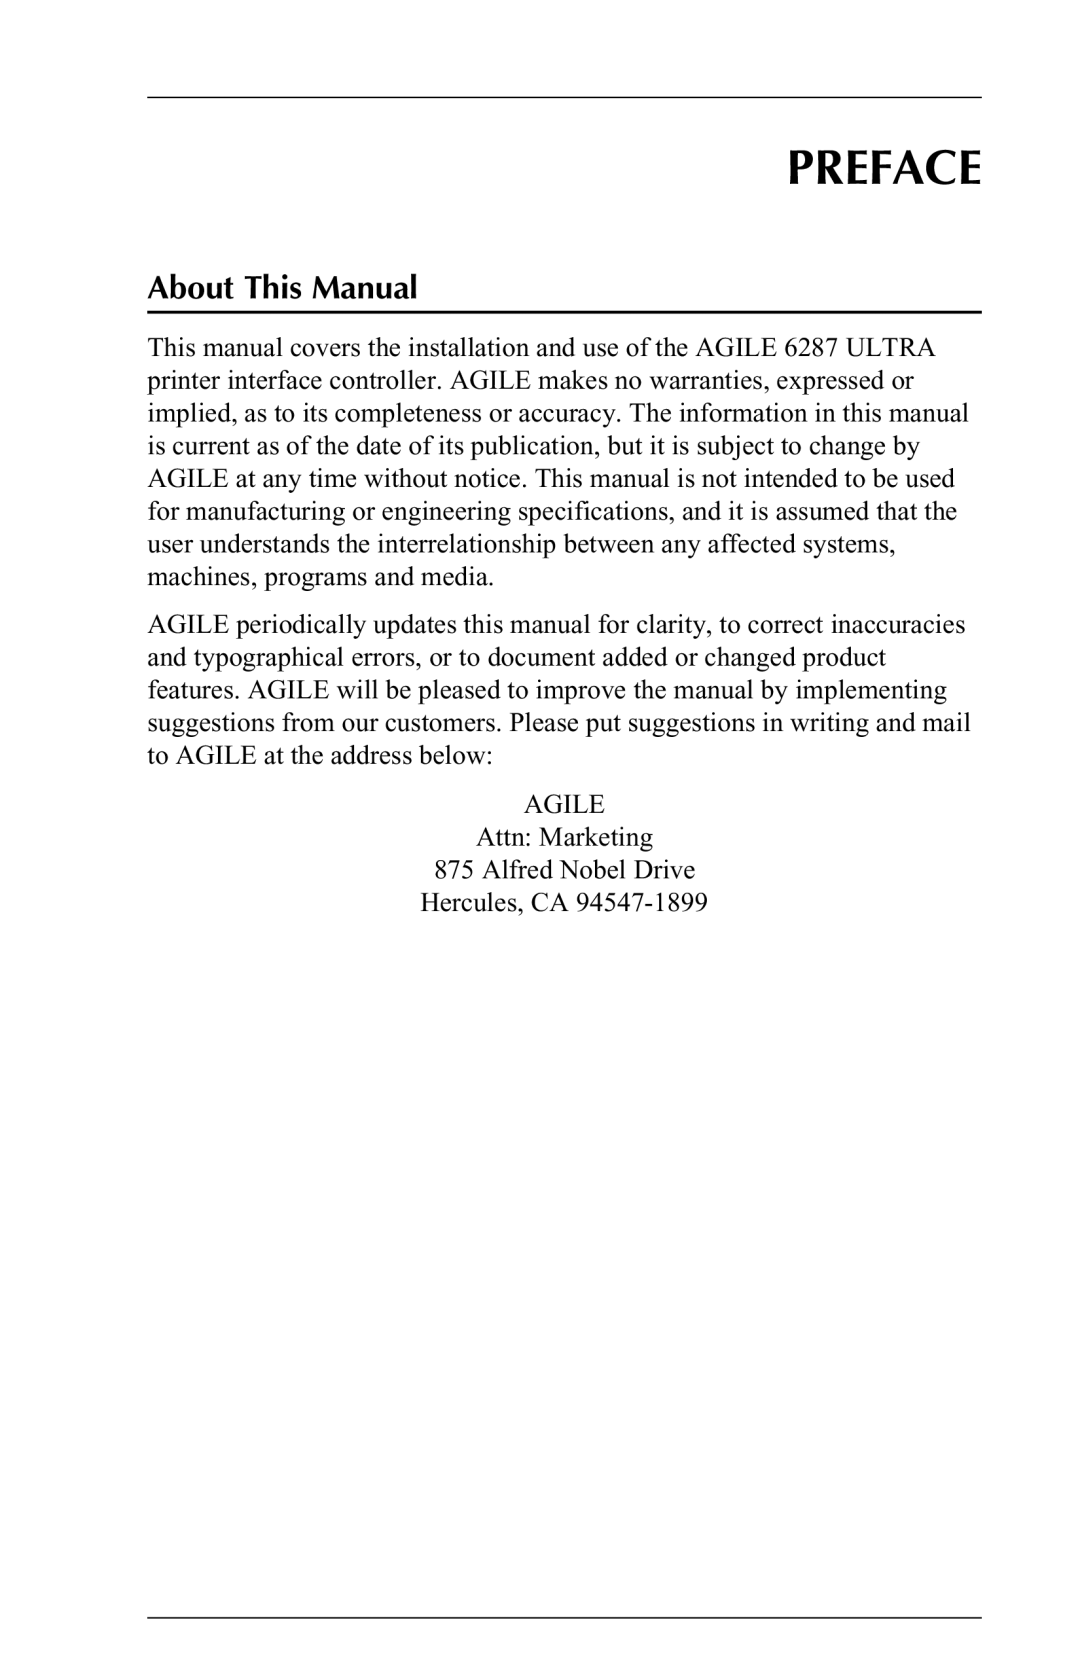 Agilent Technologies 6287 manual Preface, About This Manual, Agile 